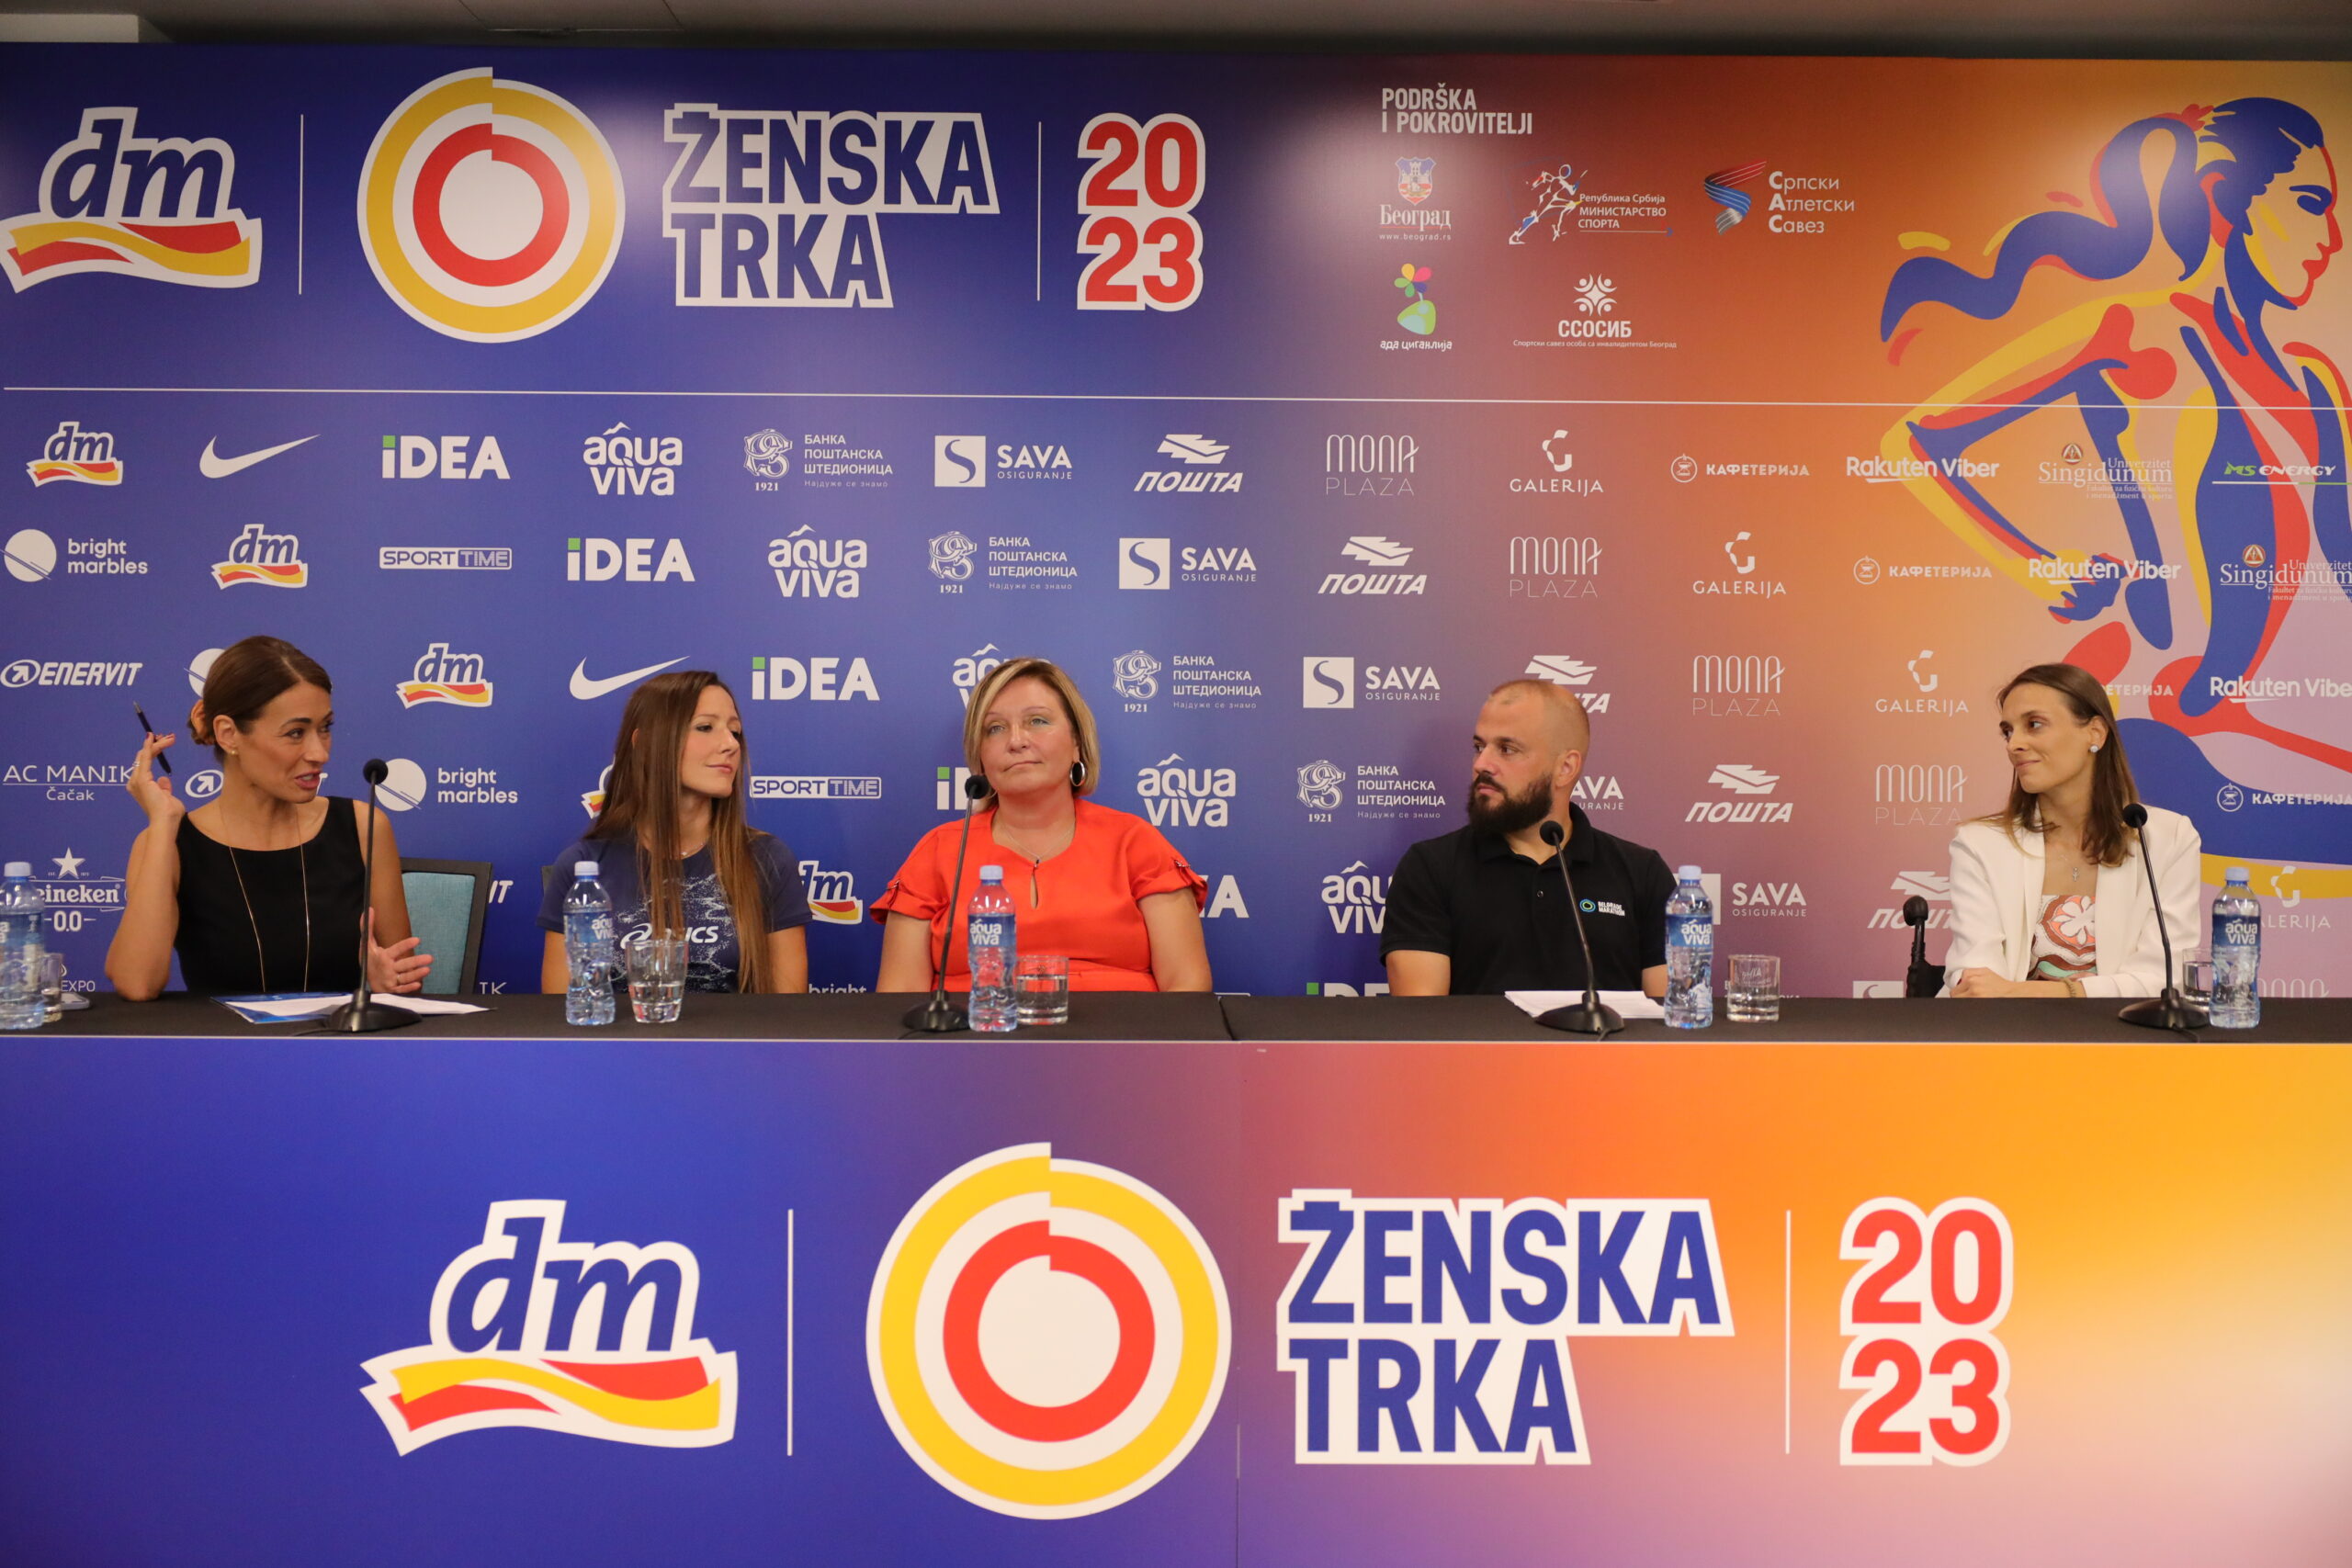 Media conference held in anticipation of the dm Women’s Race at Ada Ciganlija